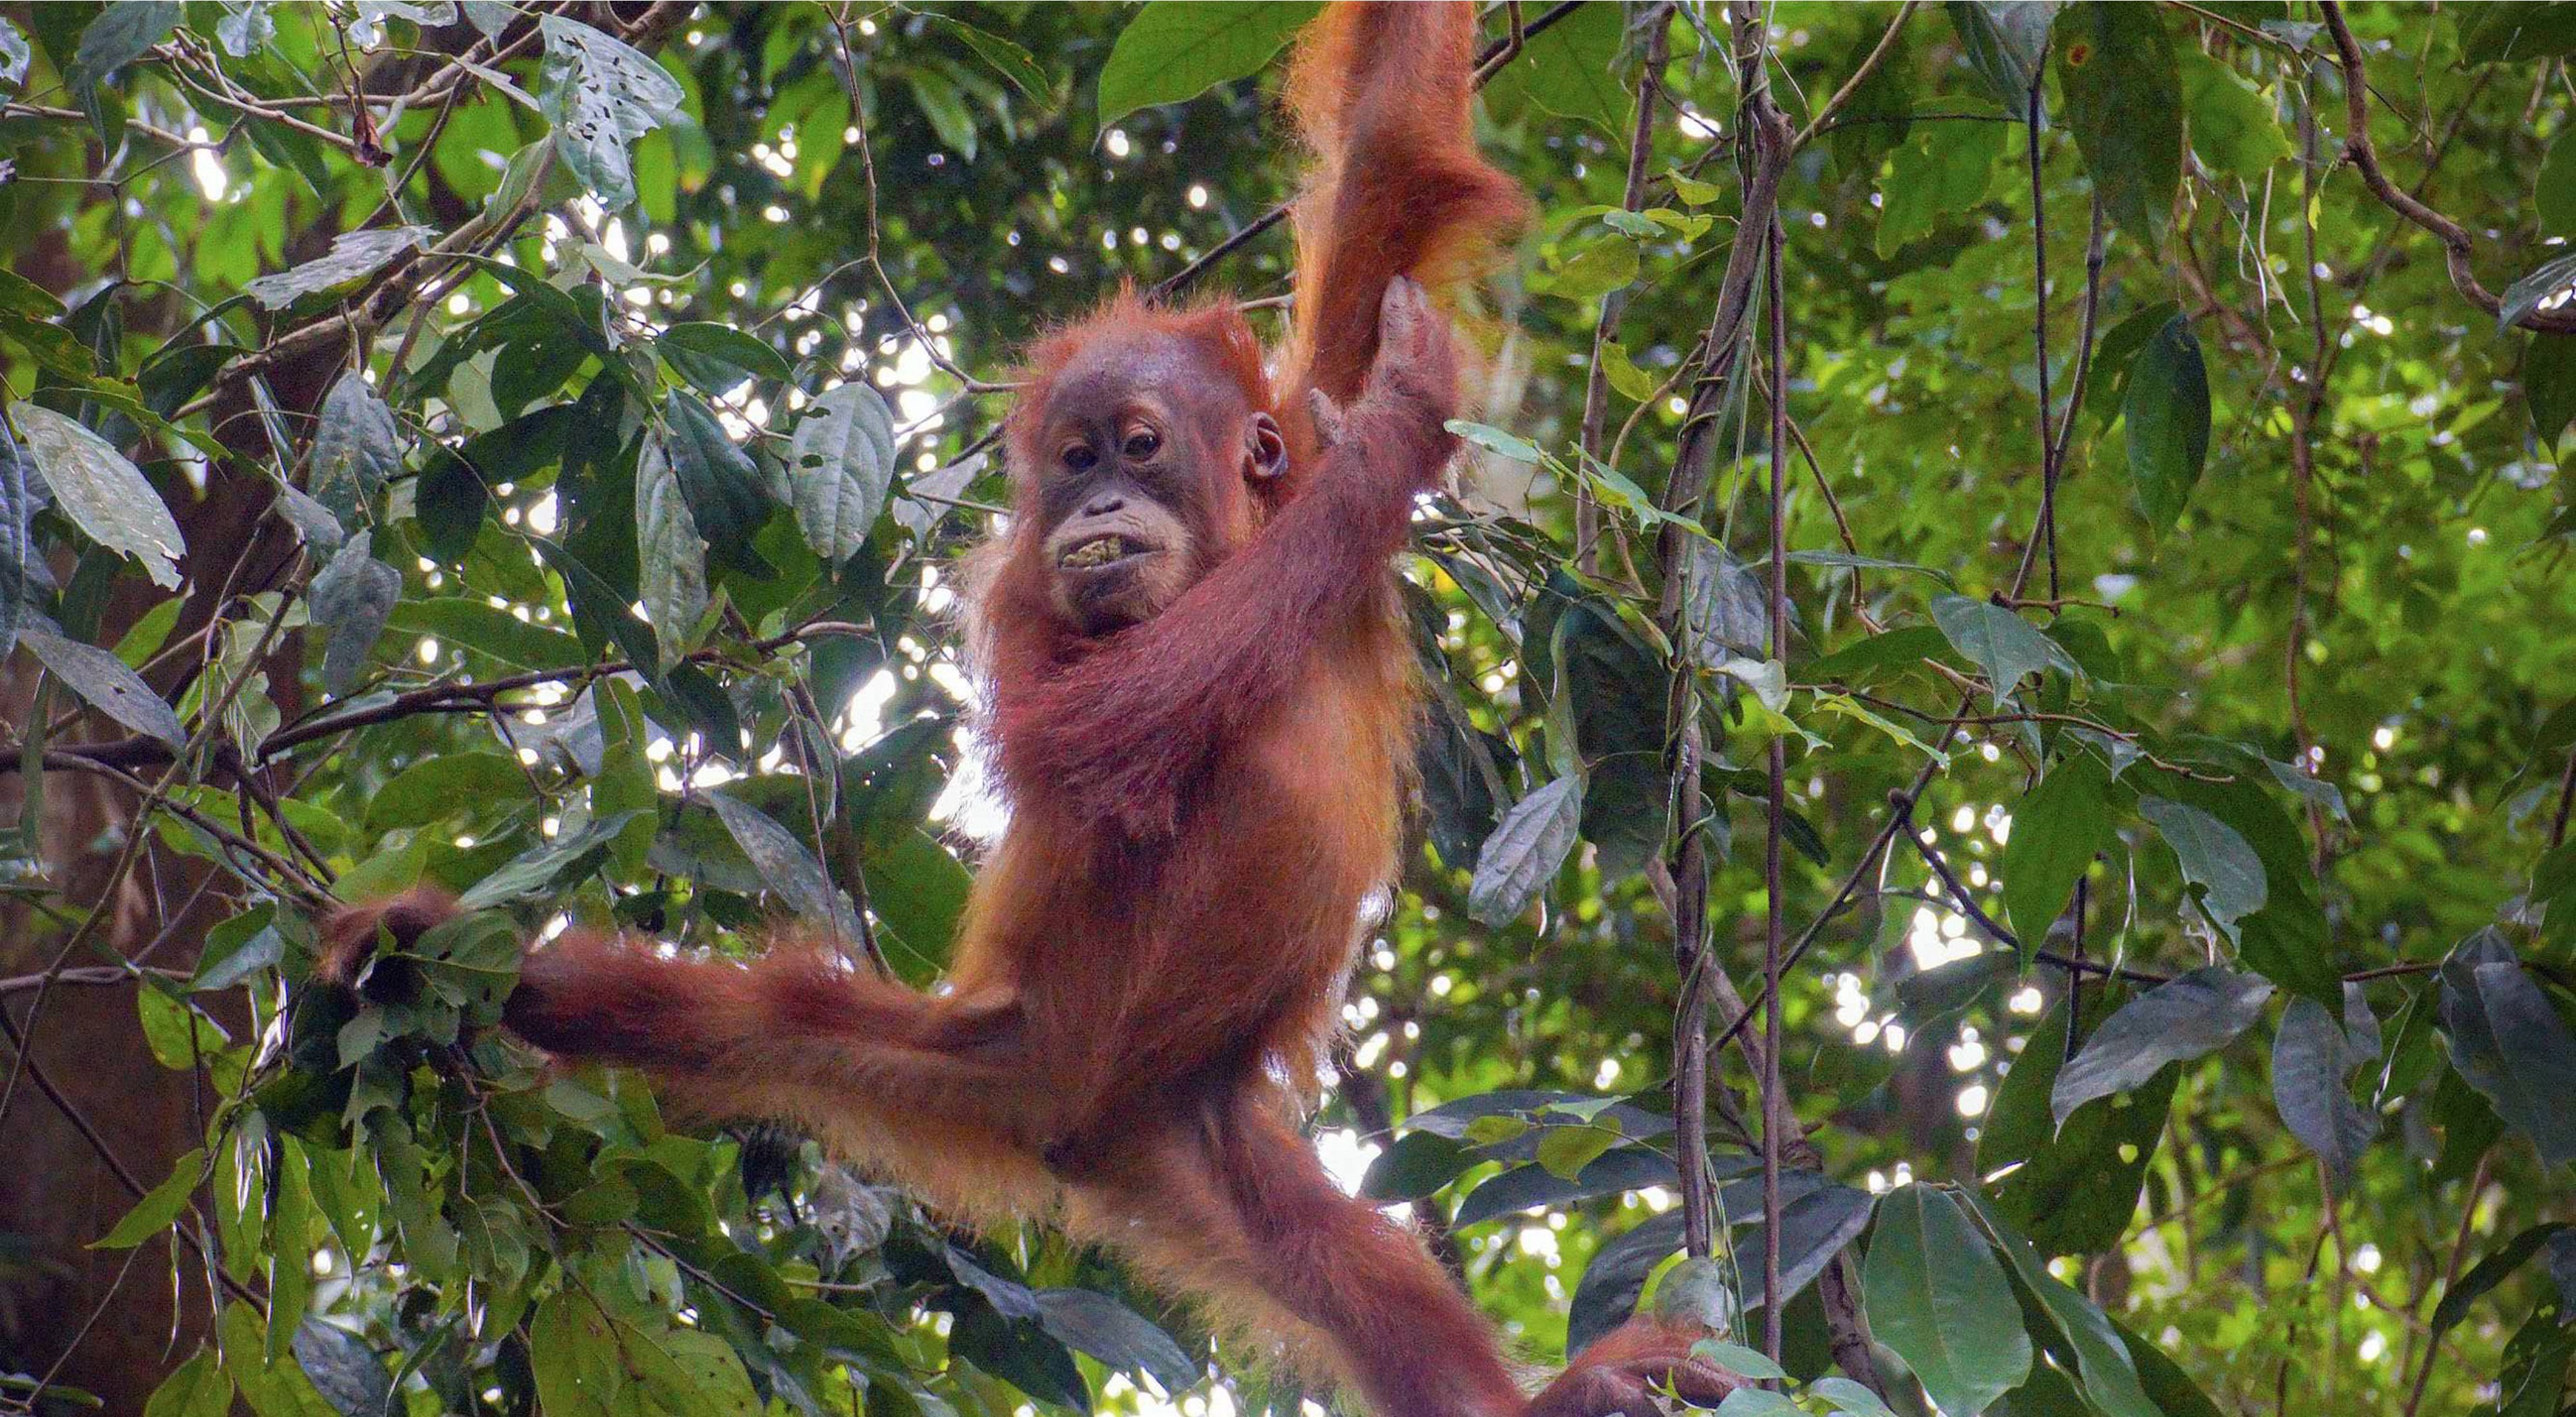 A small orangutan hangs from a tree.